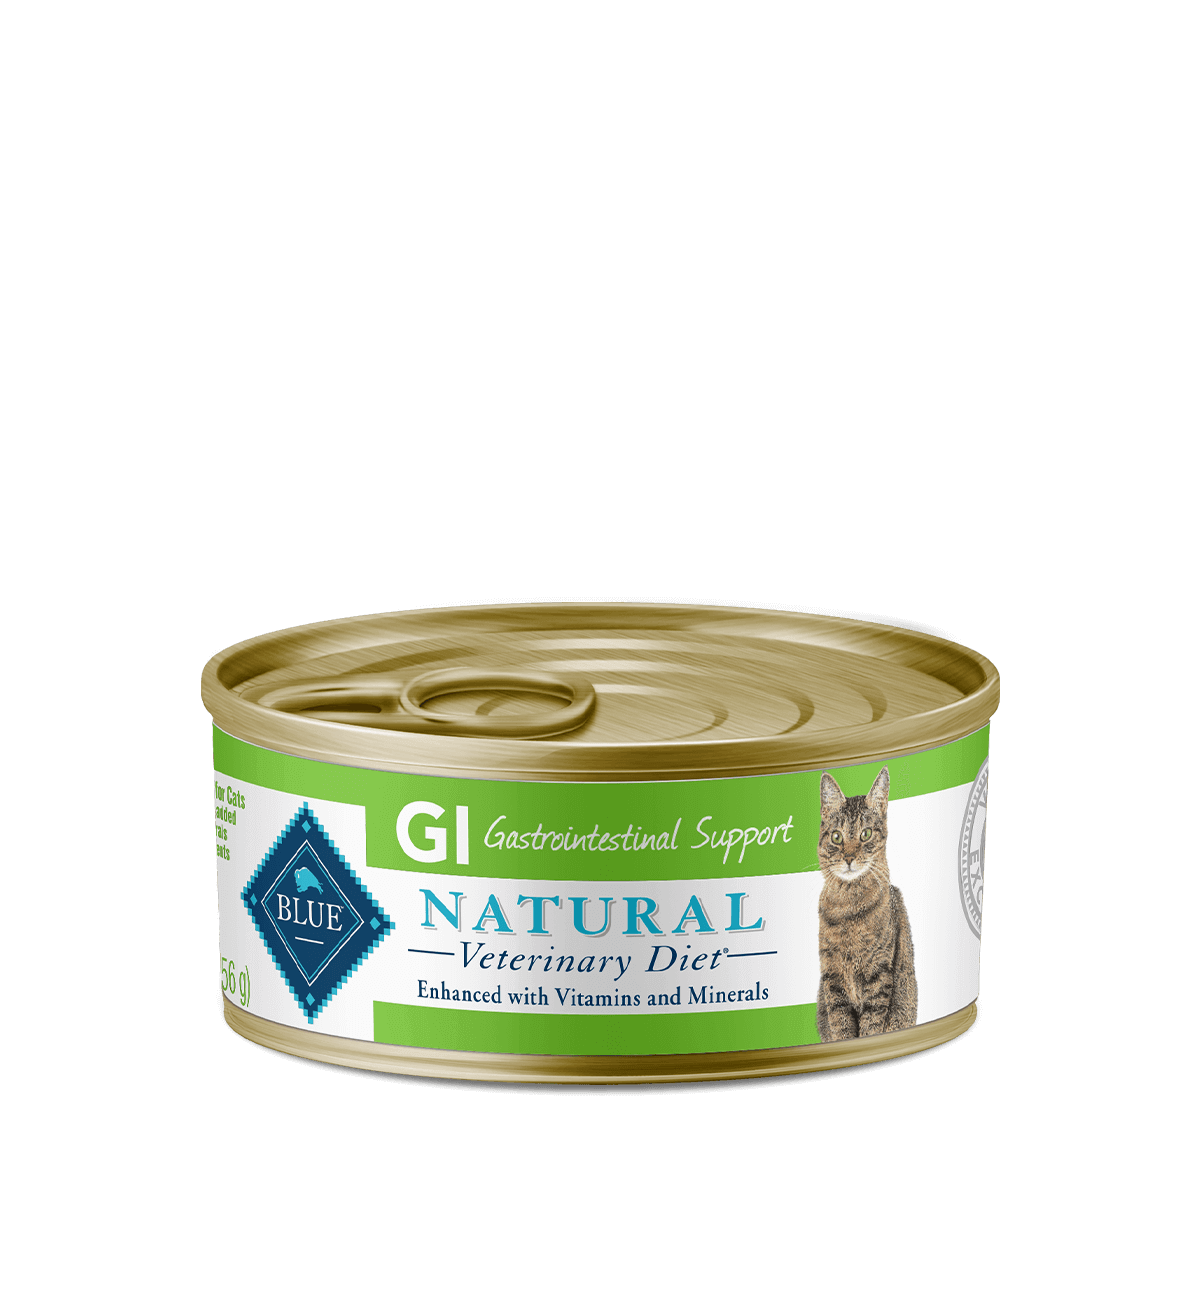 Blue Buffalo BLUE Natural Veterinary Diet GI Gastrointestinal Support Wet Cat Food